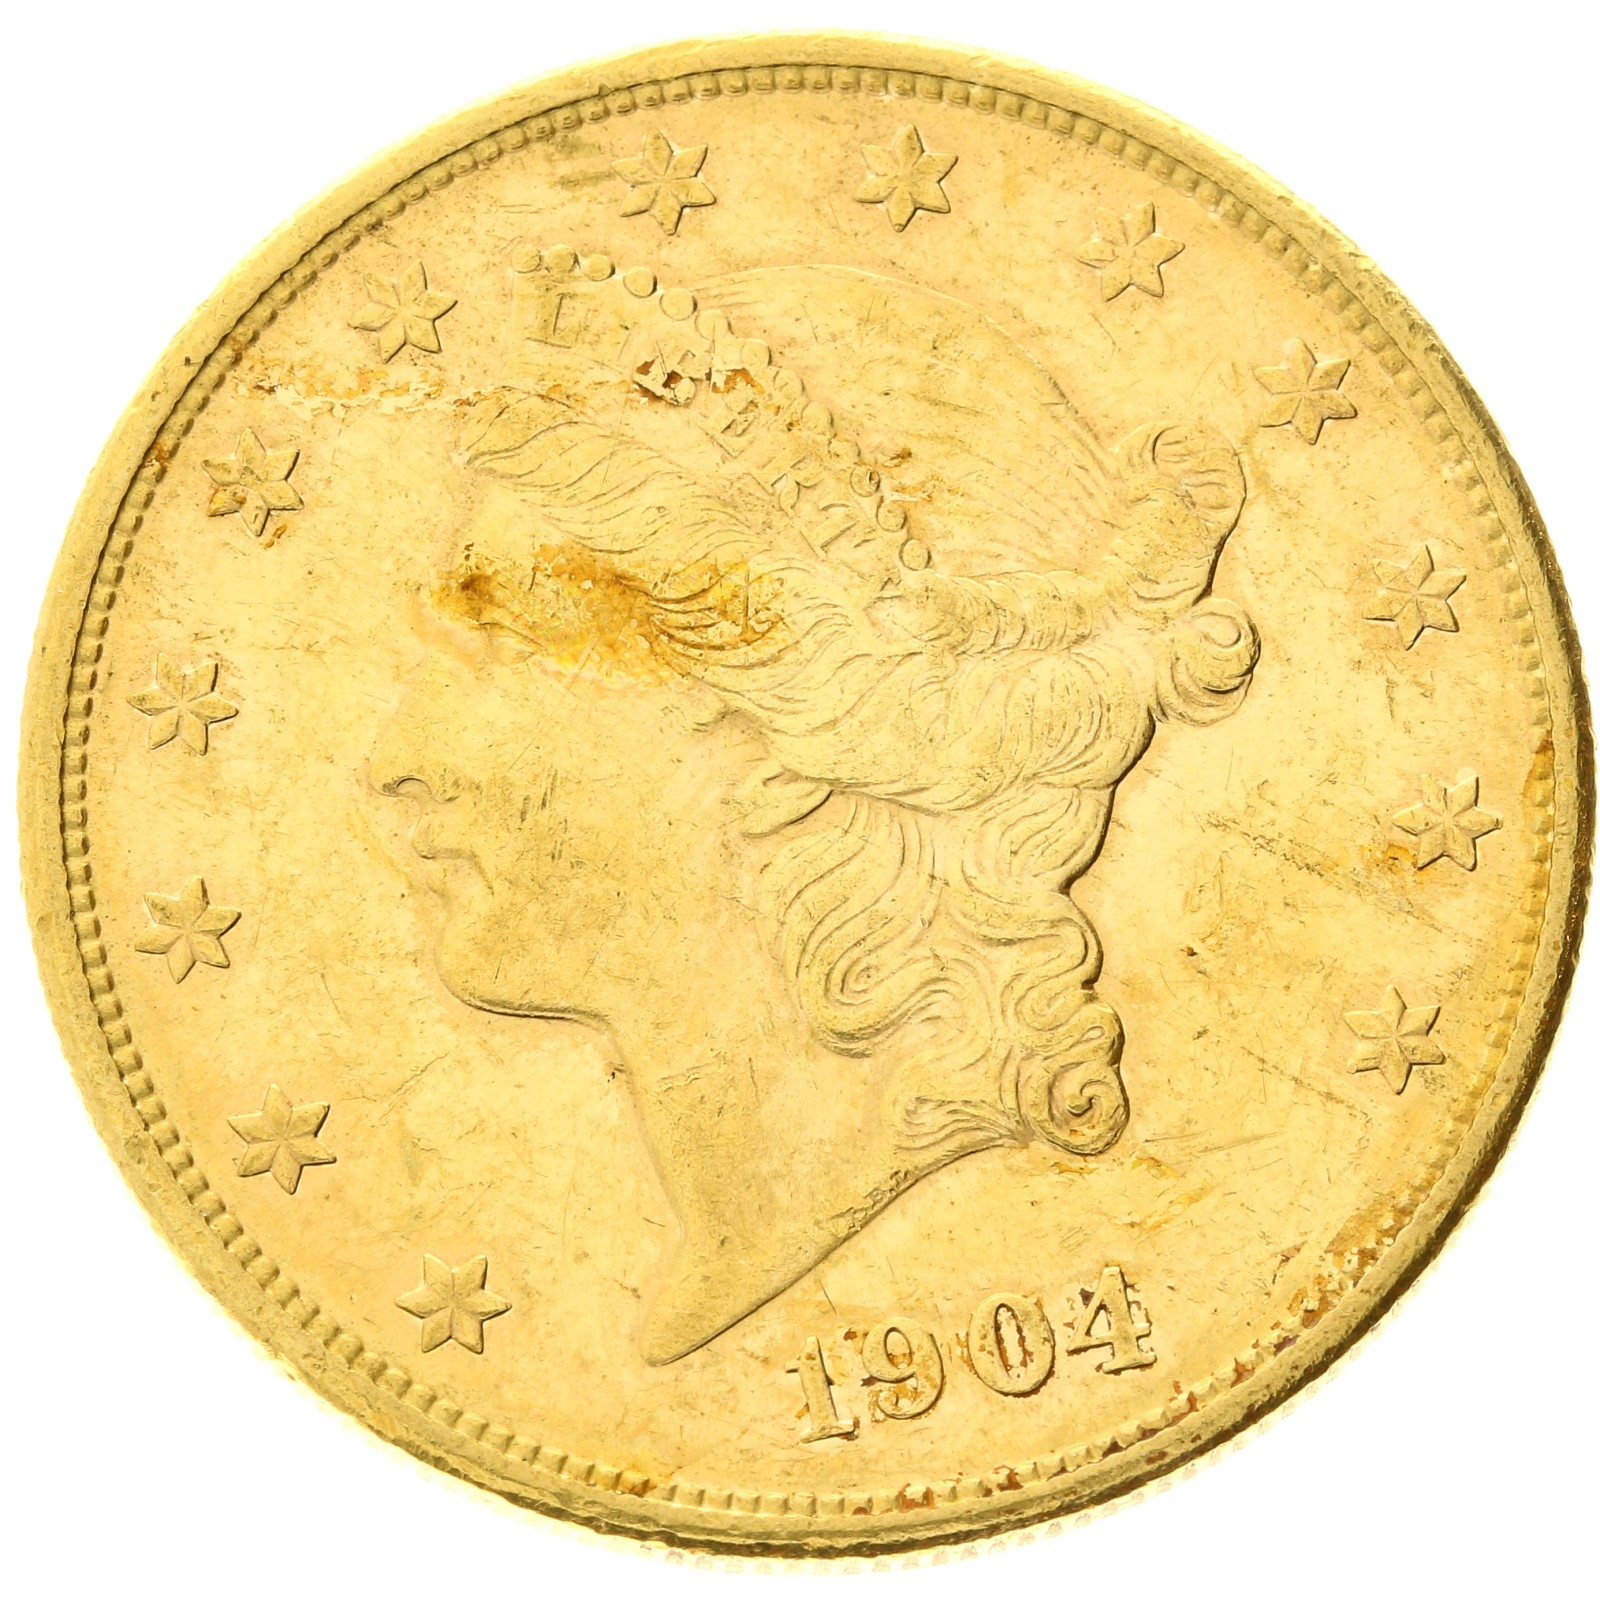 USA - 20 dollars - 1904 - S - Liberty Head 